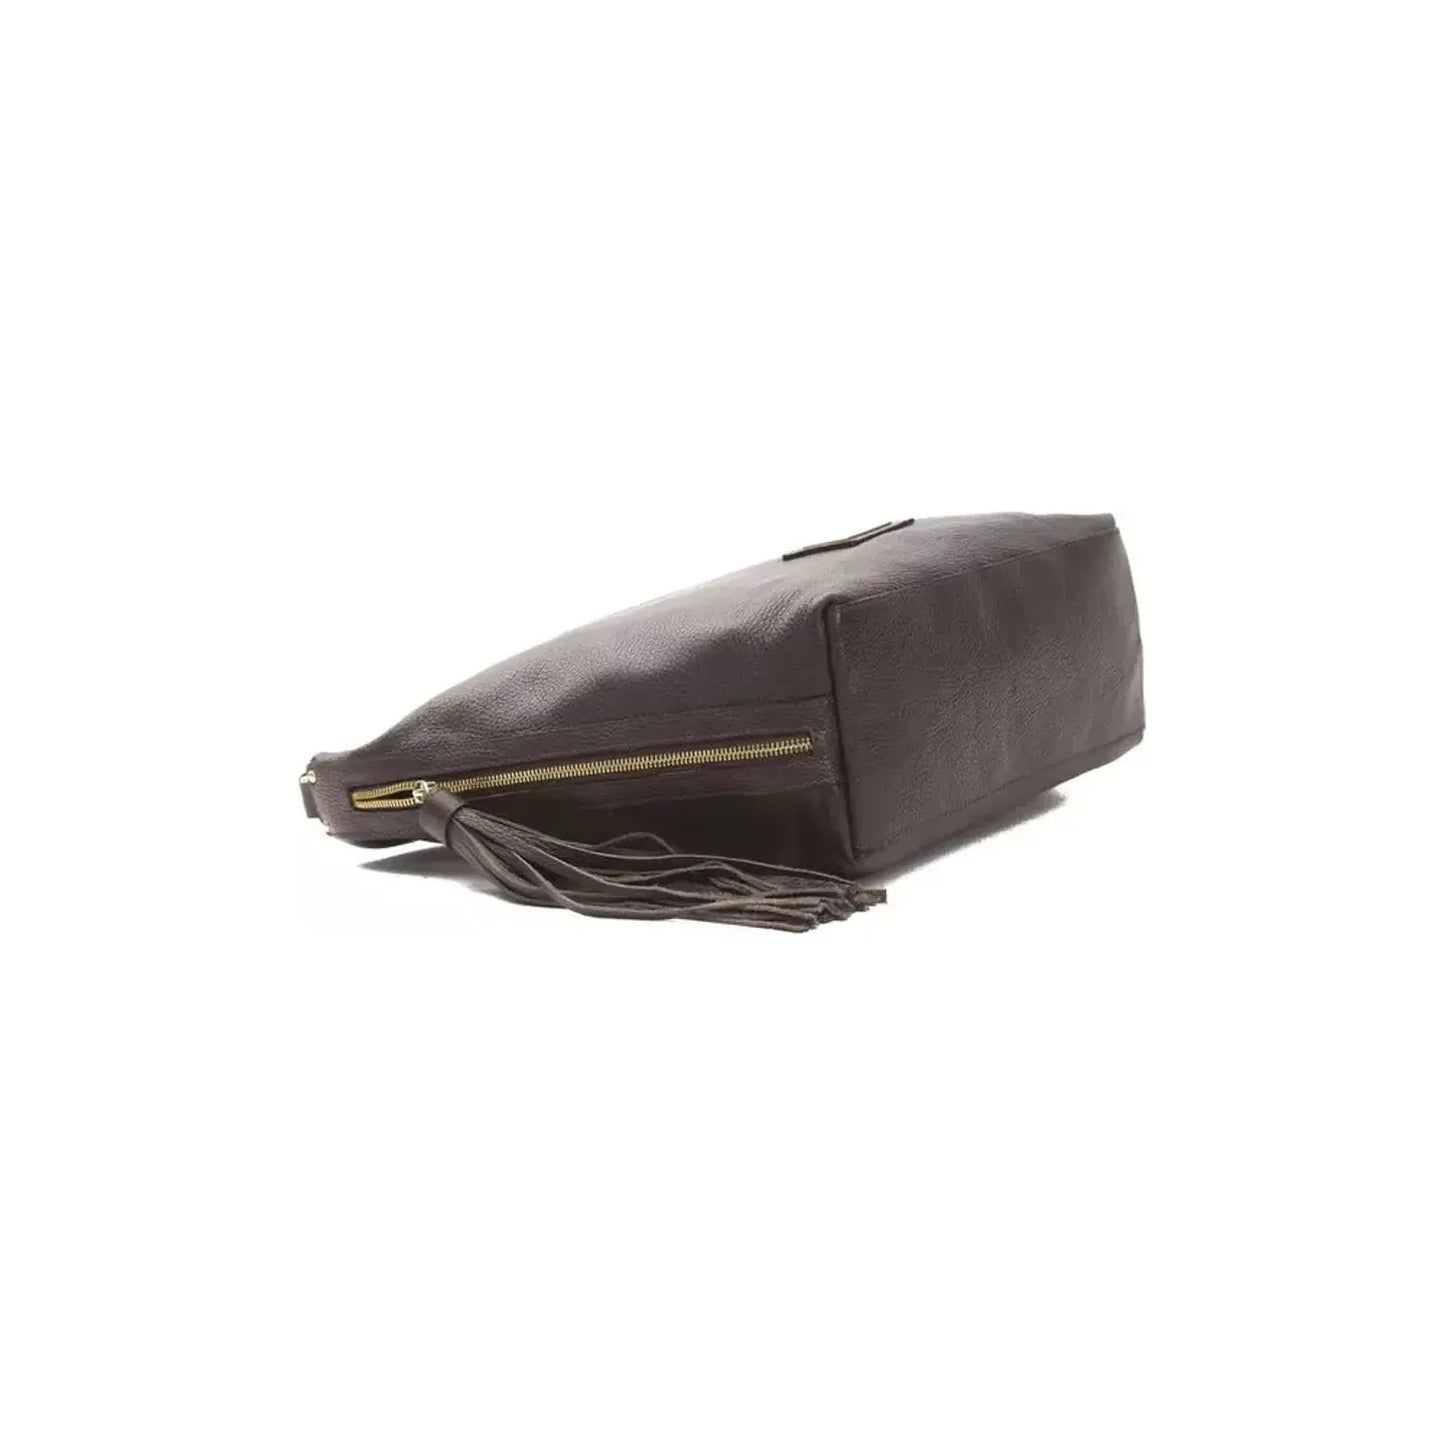 Pompei DonatellaChic Brown Leather Shoulder BagMcRichard Designer Brands£169.00